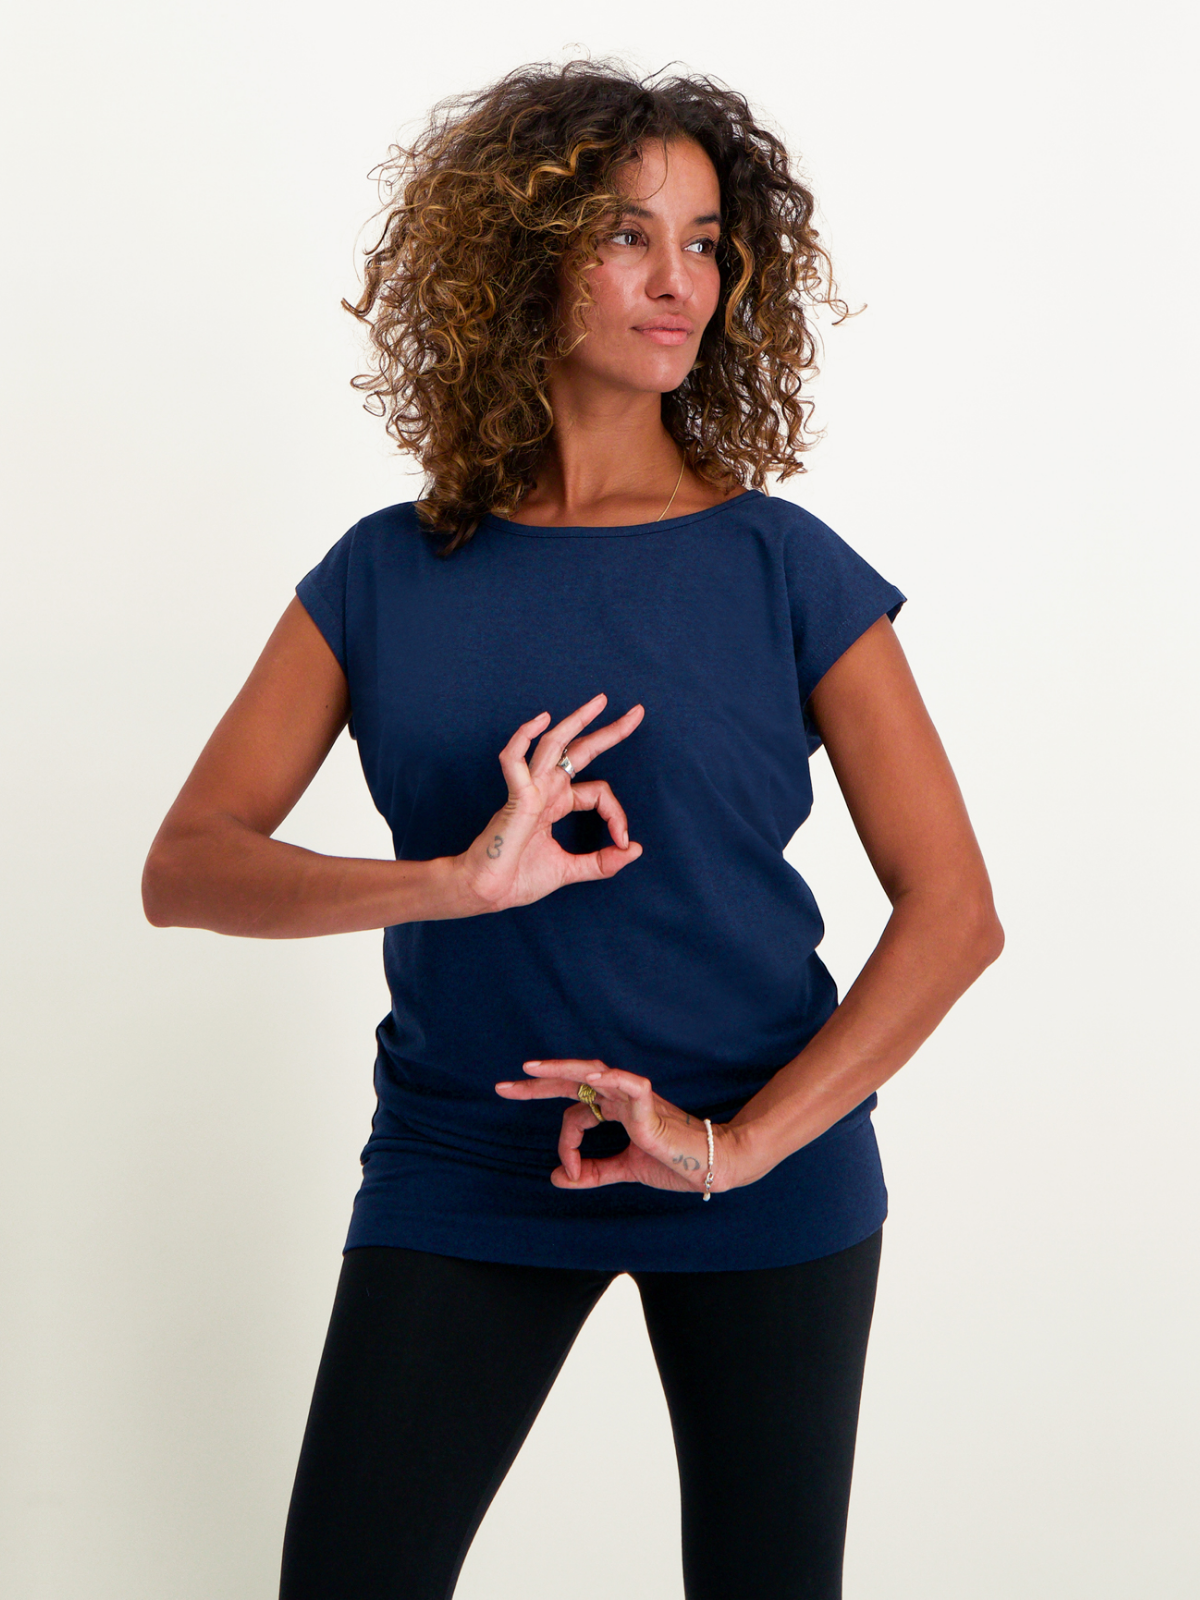 Yoga Tops for Women - Premium Yoga Shirts for Women Vintage